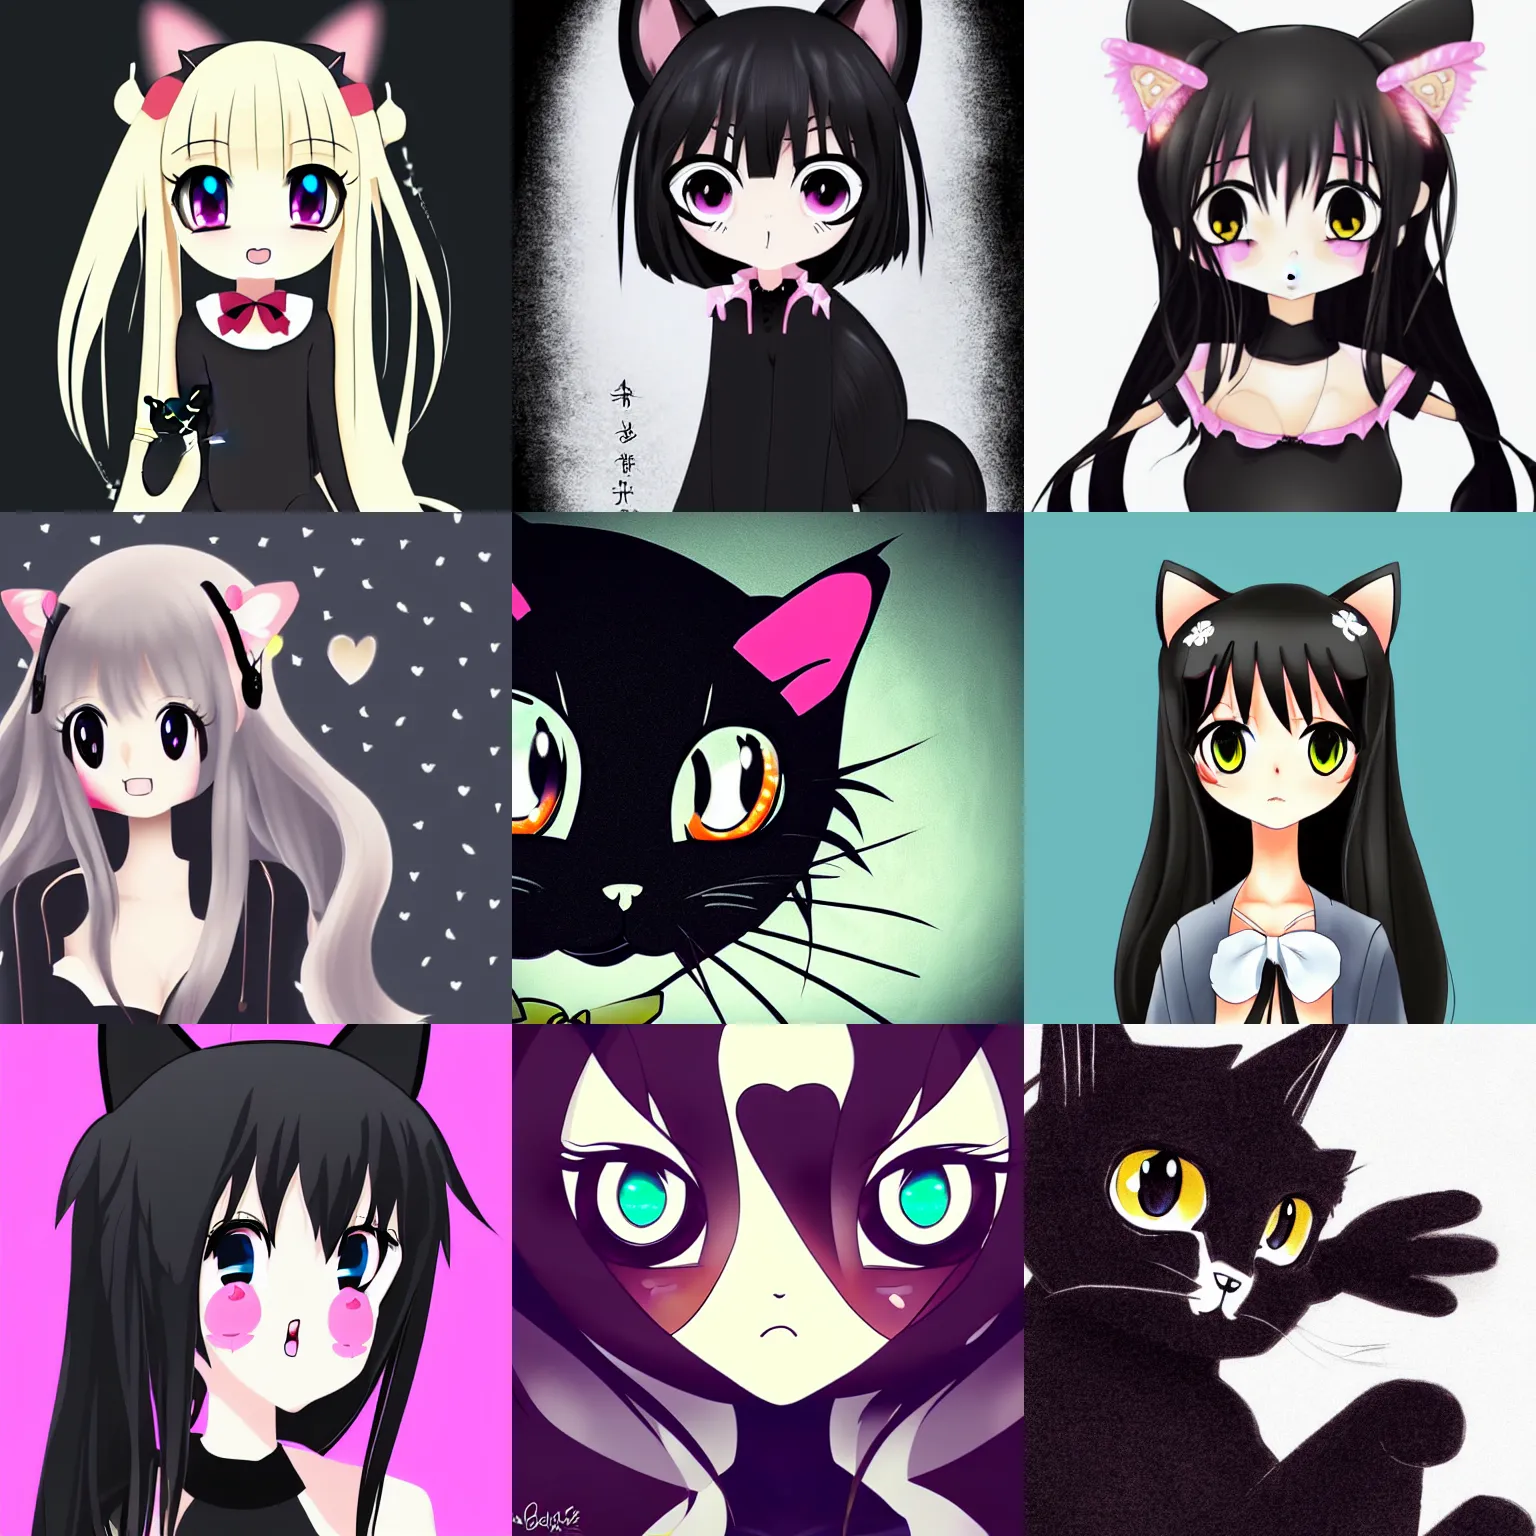 Prompt: cute, female, anime style, a salem black cat girl, beautiful lighting, large eyes, sharp focus, simple background, creative